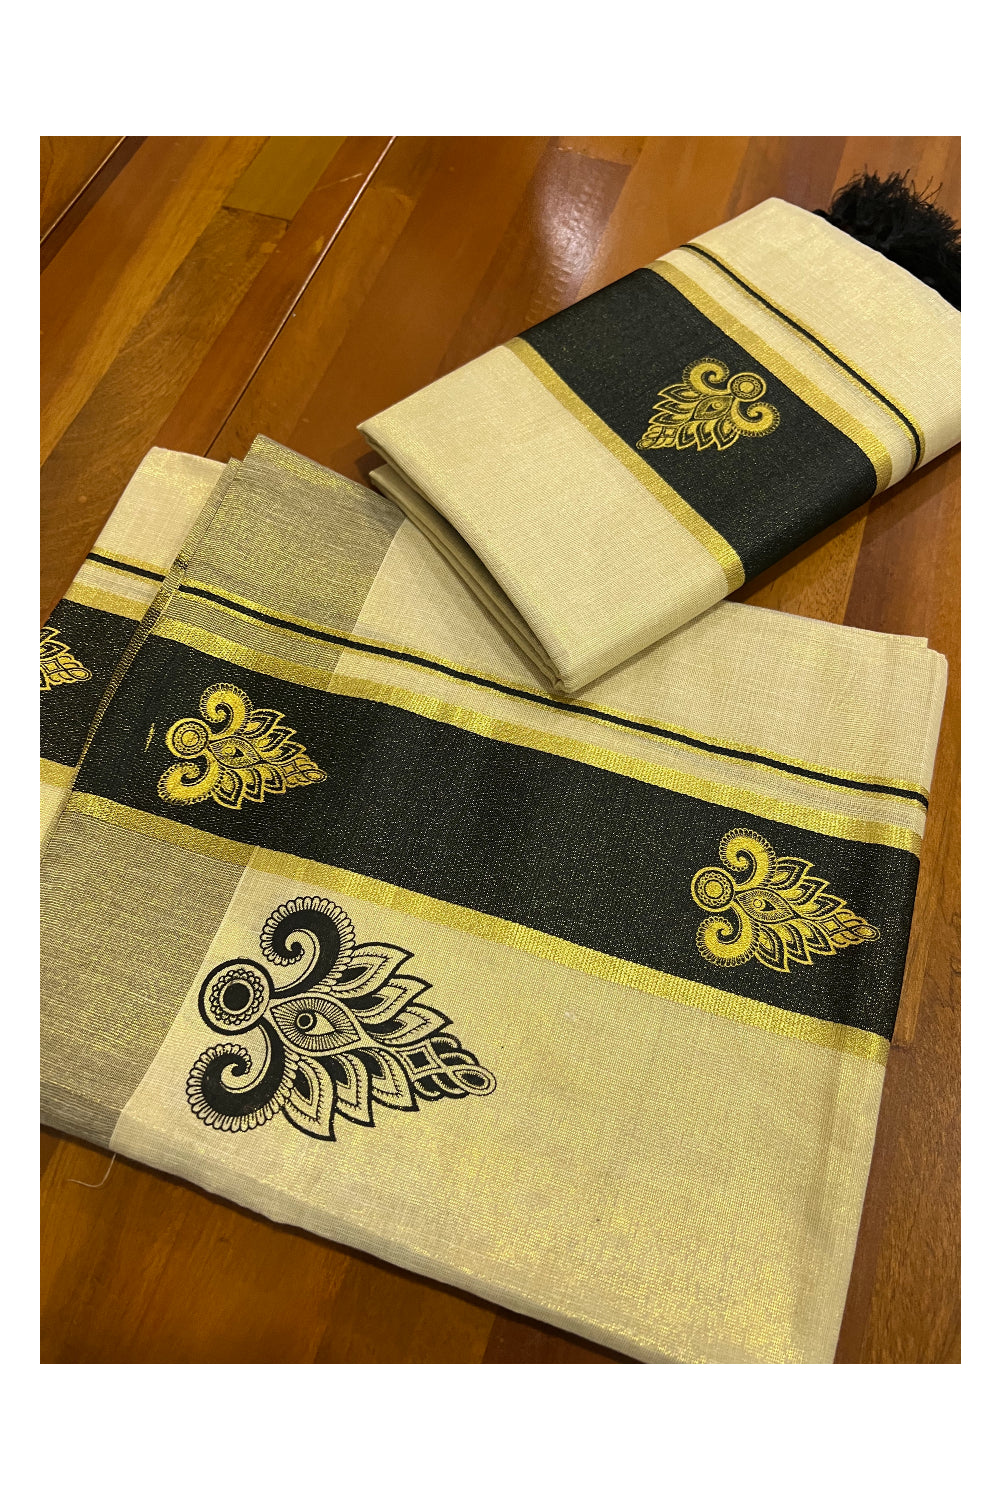 Kerala Tissue Kasavu Set Mundu (Mundum Neriyathum) with Golden and Black Block Prints and Tassels